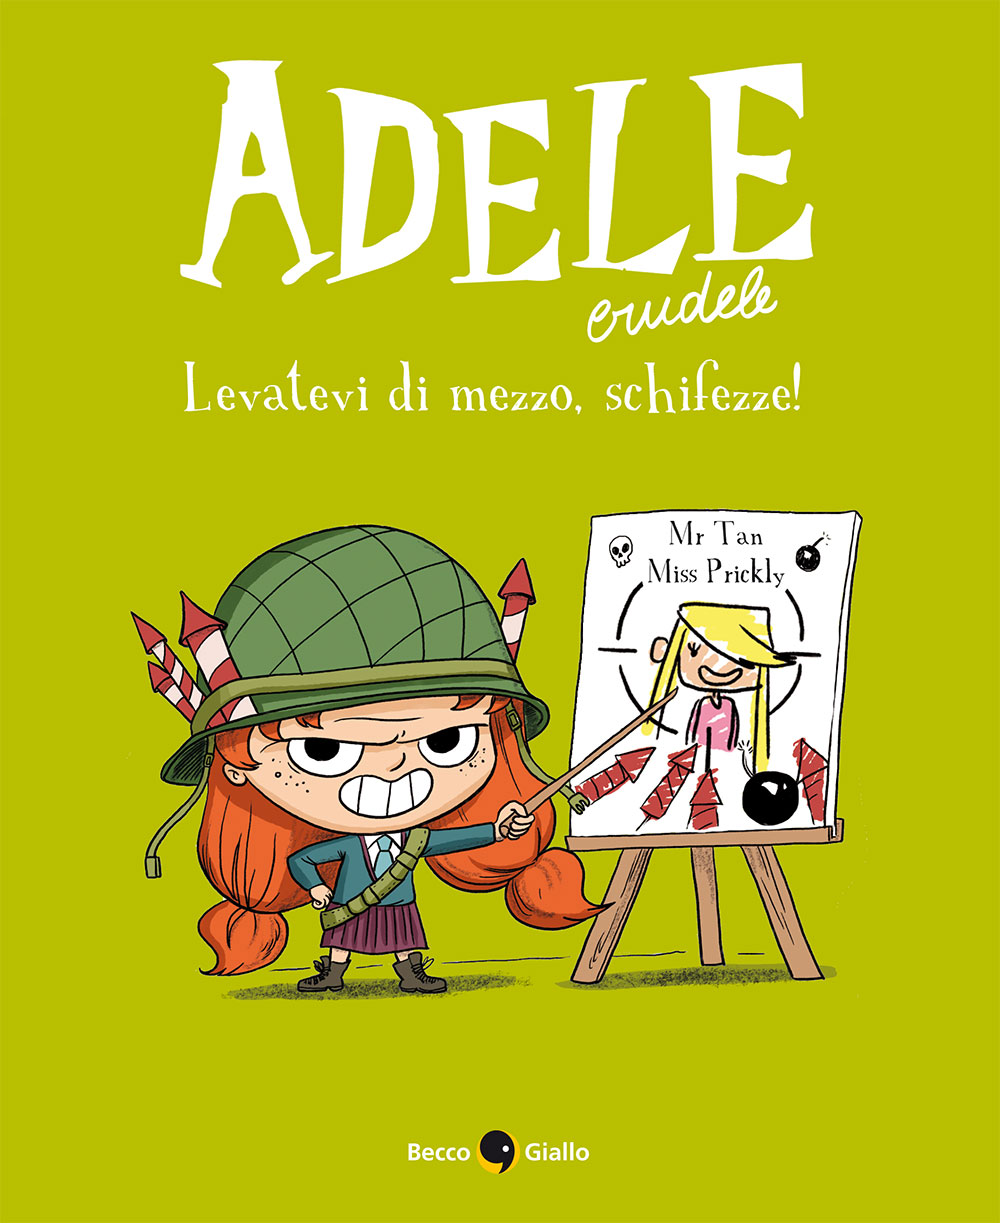 Adele Crudele – Due nuovi volumi in libreria